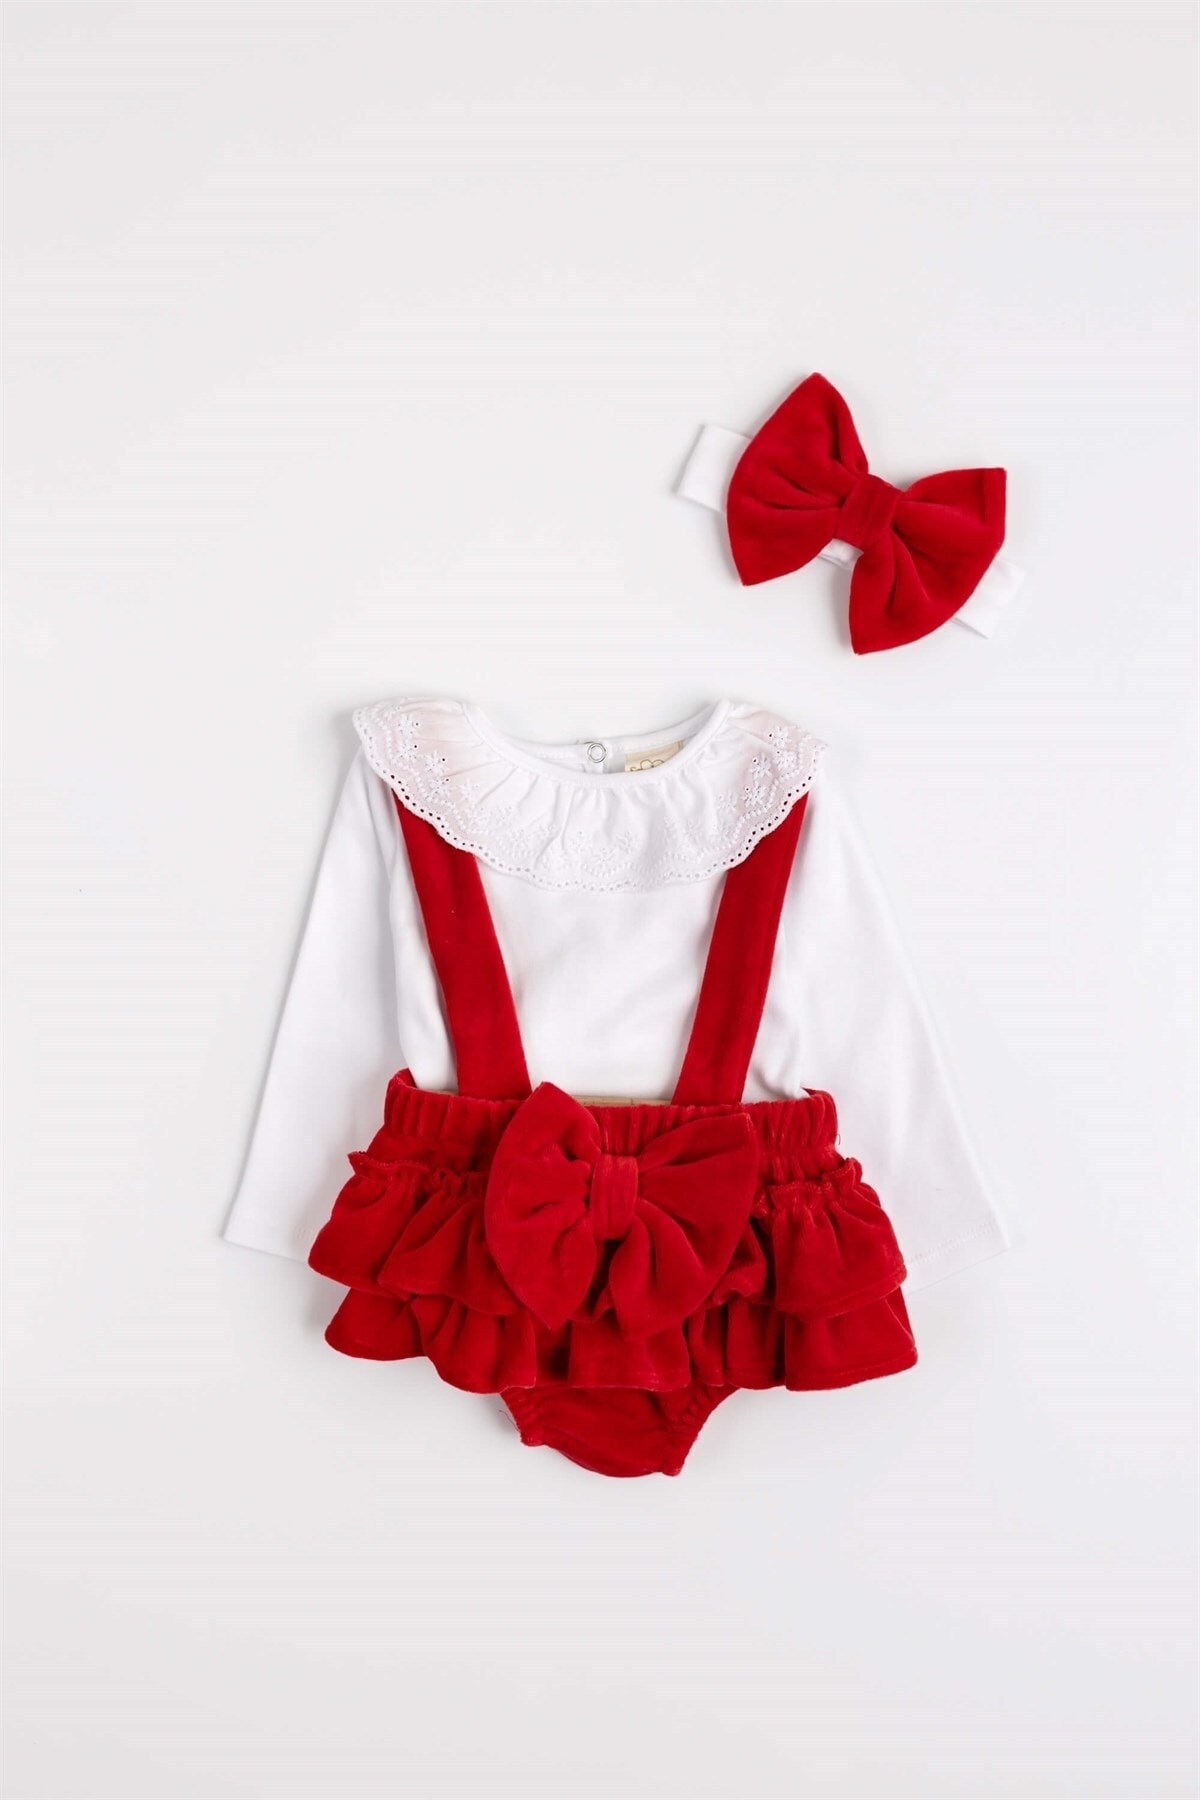 Le Mabelle Kırmızı Fisto Yaka Gömlekli Kız Bebek Ikili Romper Takım - Candace OR10015